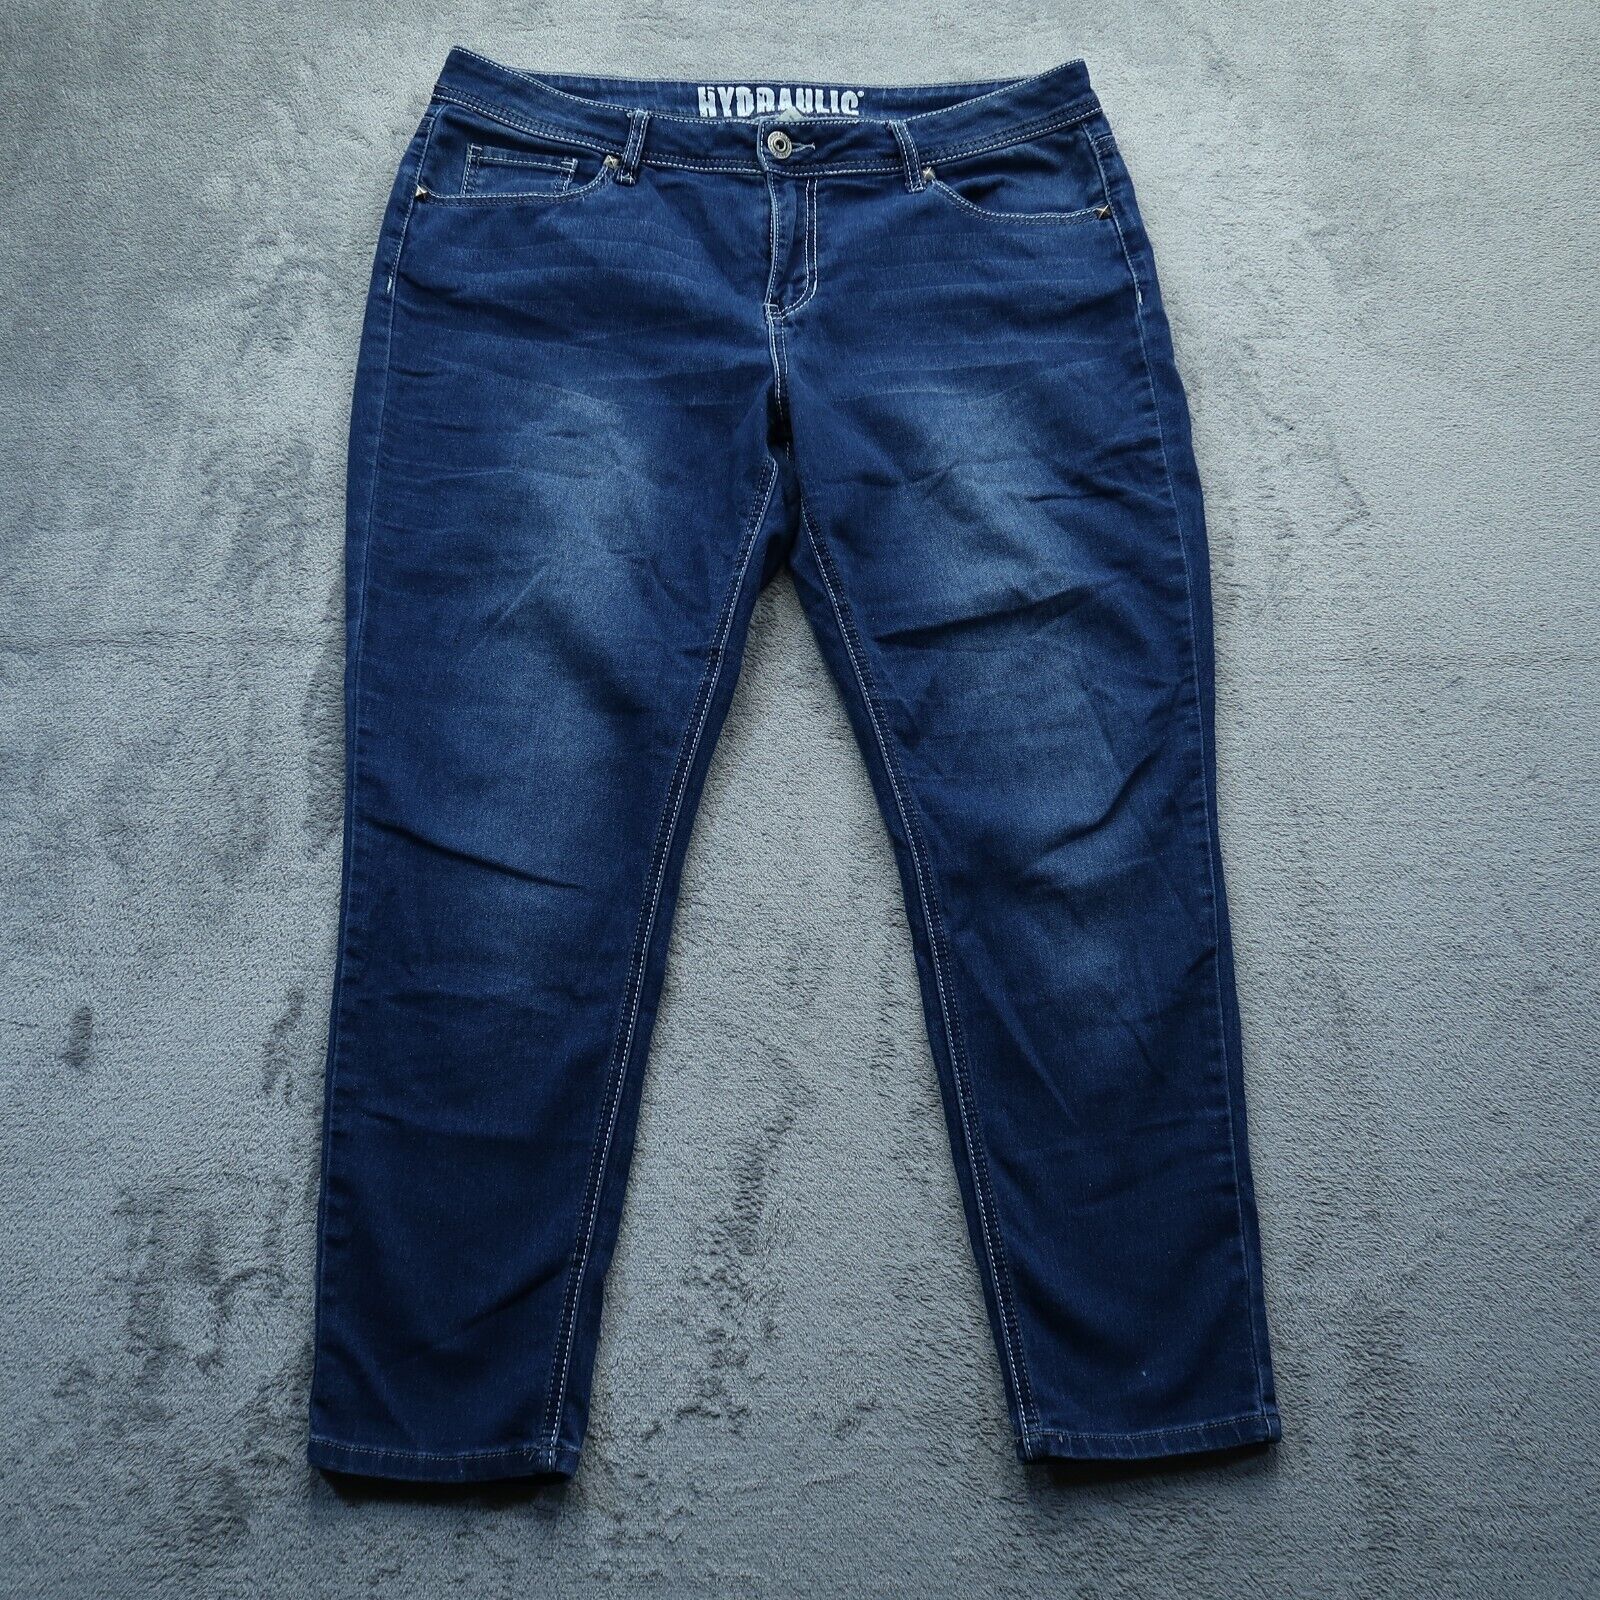 evne Sætte Begrænse Hydraulic Jeans Women's Size 16P/36x28 Mid-Rise Skinny Cotton Blend Denim  Blue | eBay